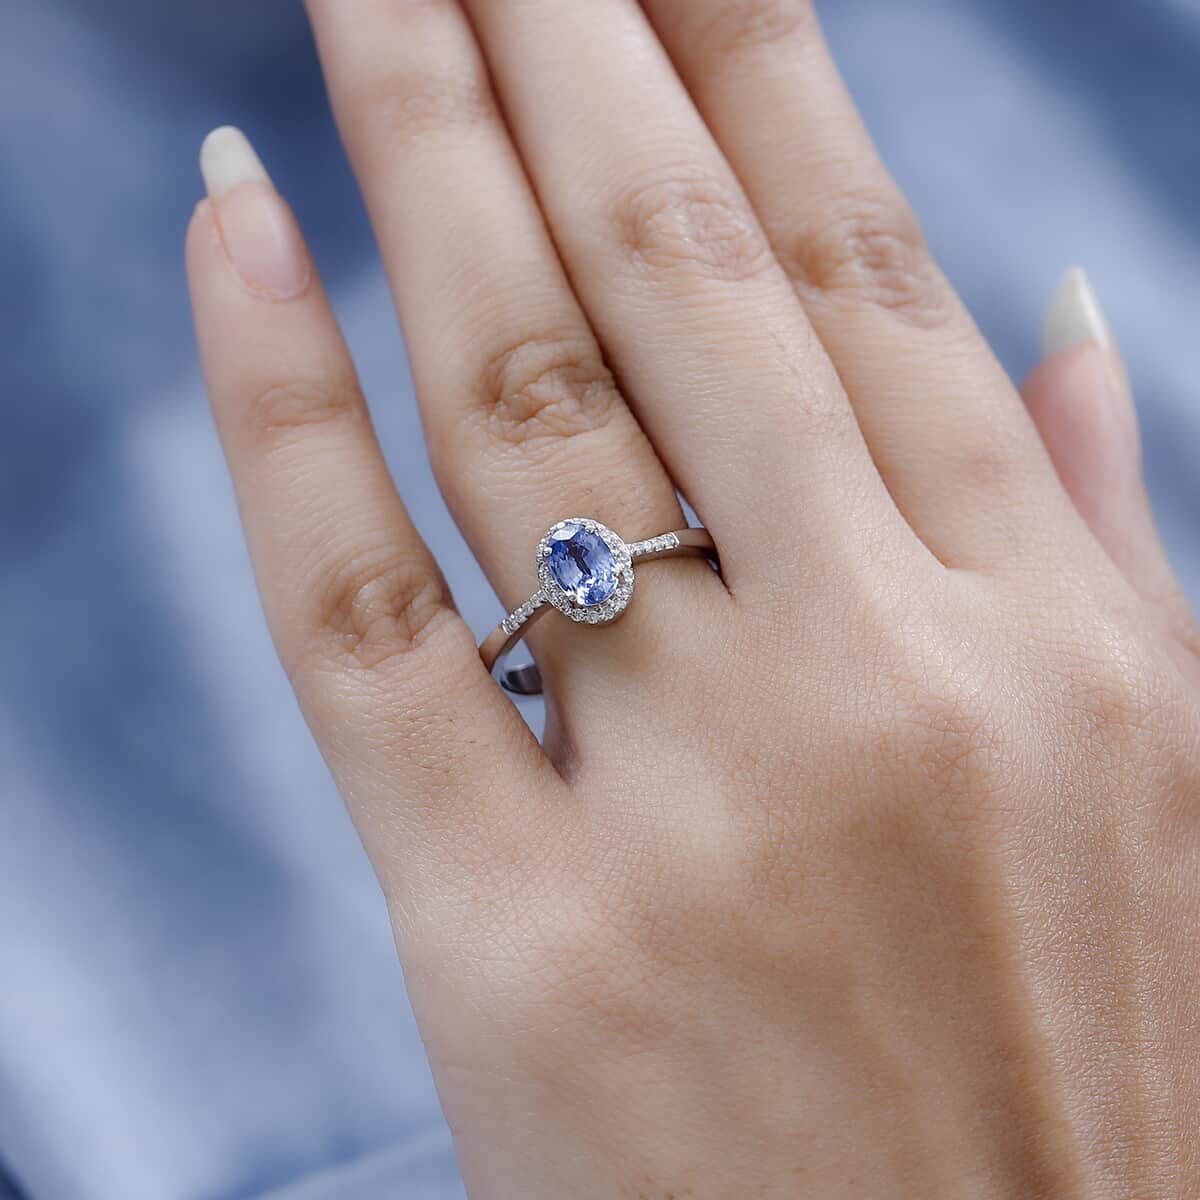 Luxoro 10K White Gold Premium Ceylon Blue Sapphire and G-H I3 Diamond Ring (Size 6.0) 1.15 ctw image number 2